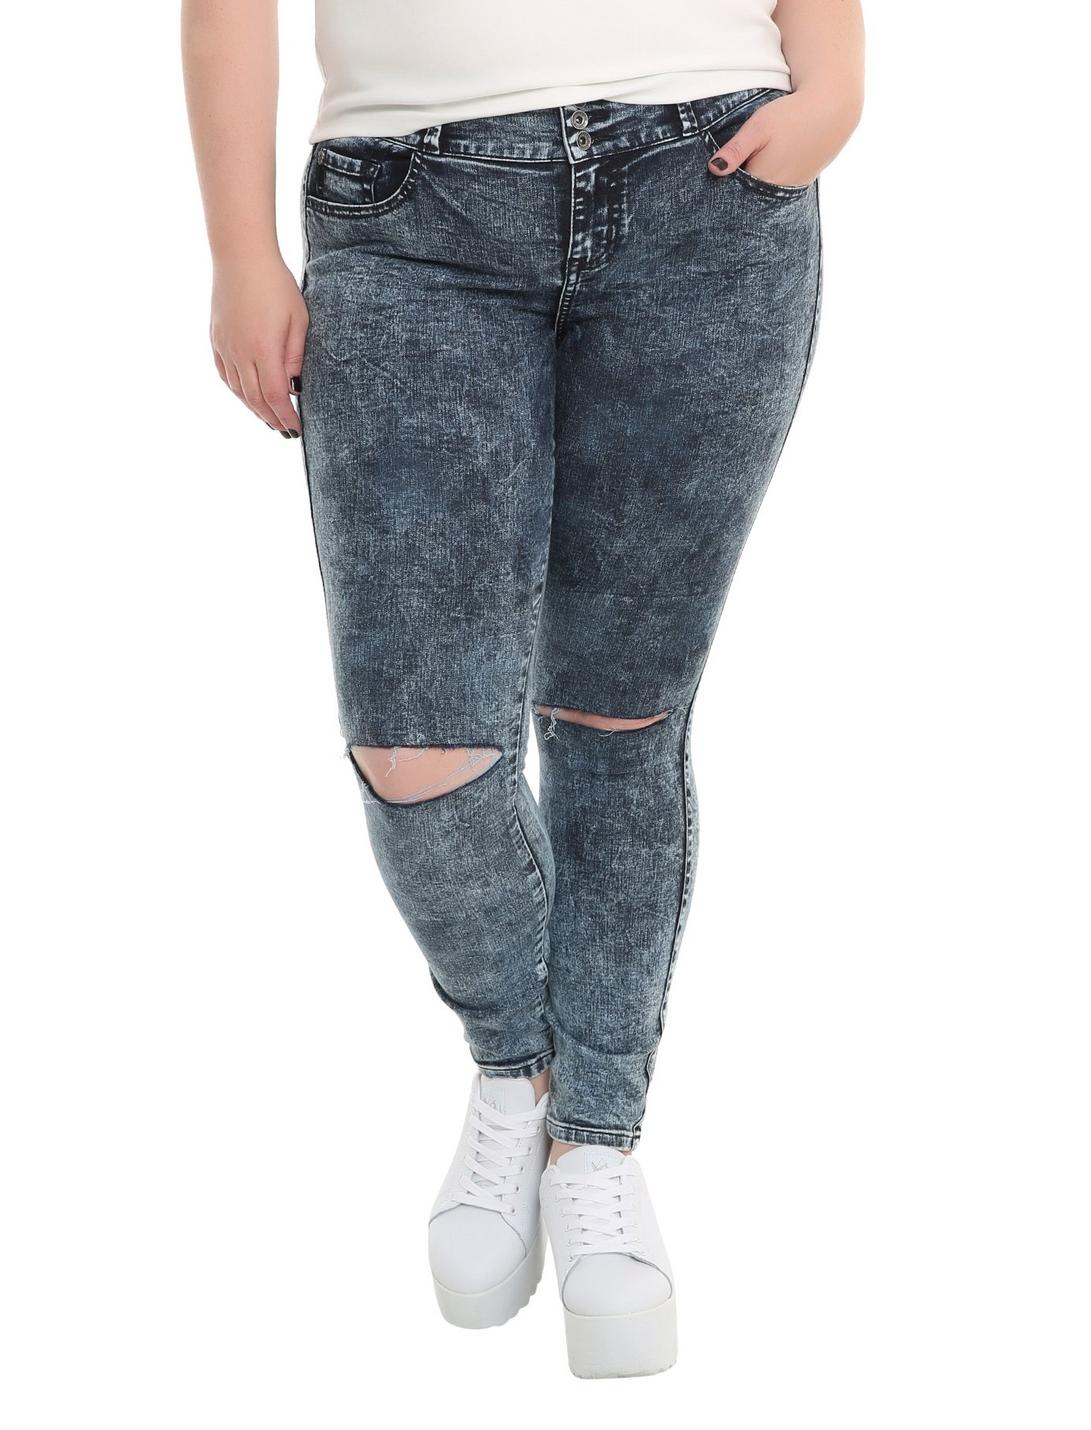 Blackheart Indigo Acid Wash Super Skinny Jeans Plus Size, BLUE, hi-res